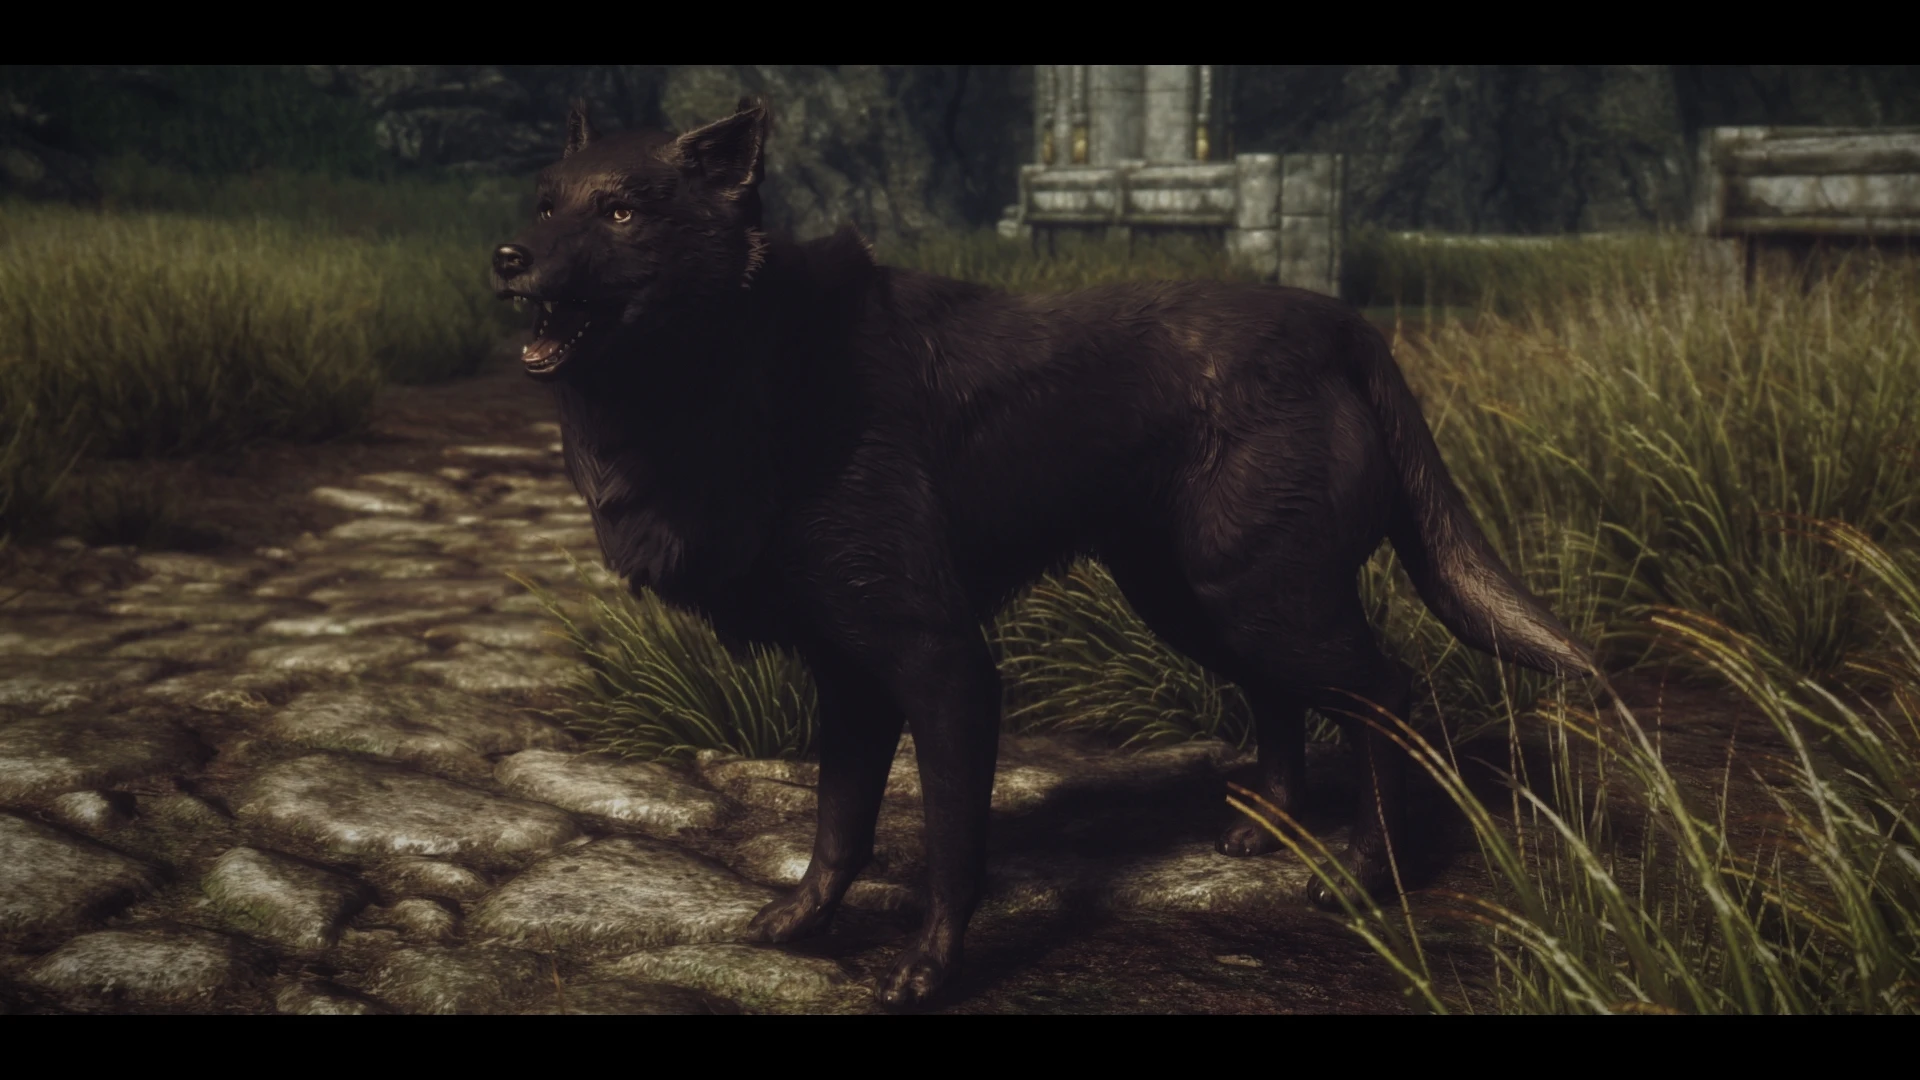 skyrim wolf companion mod